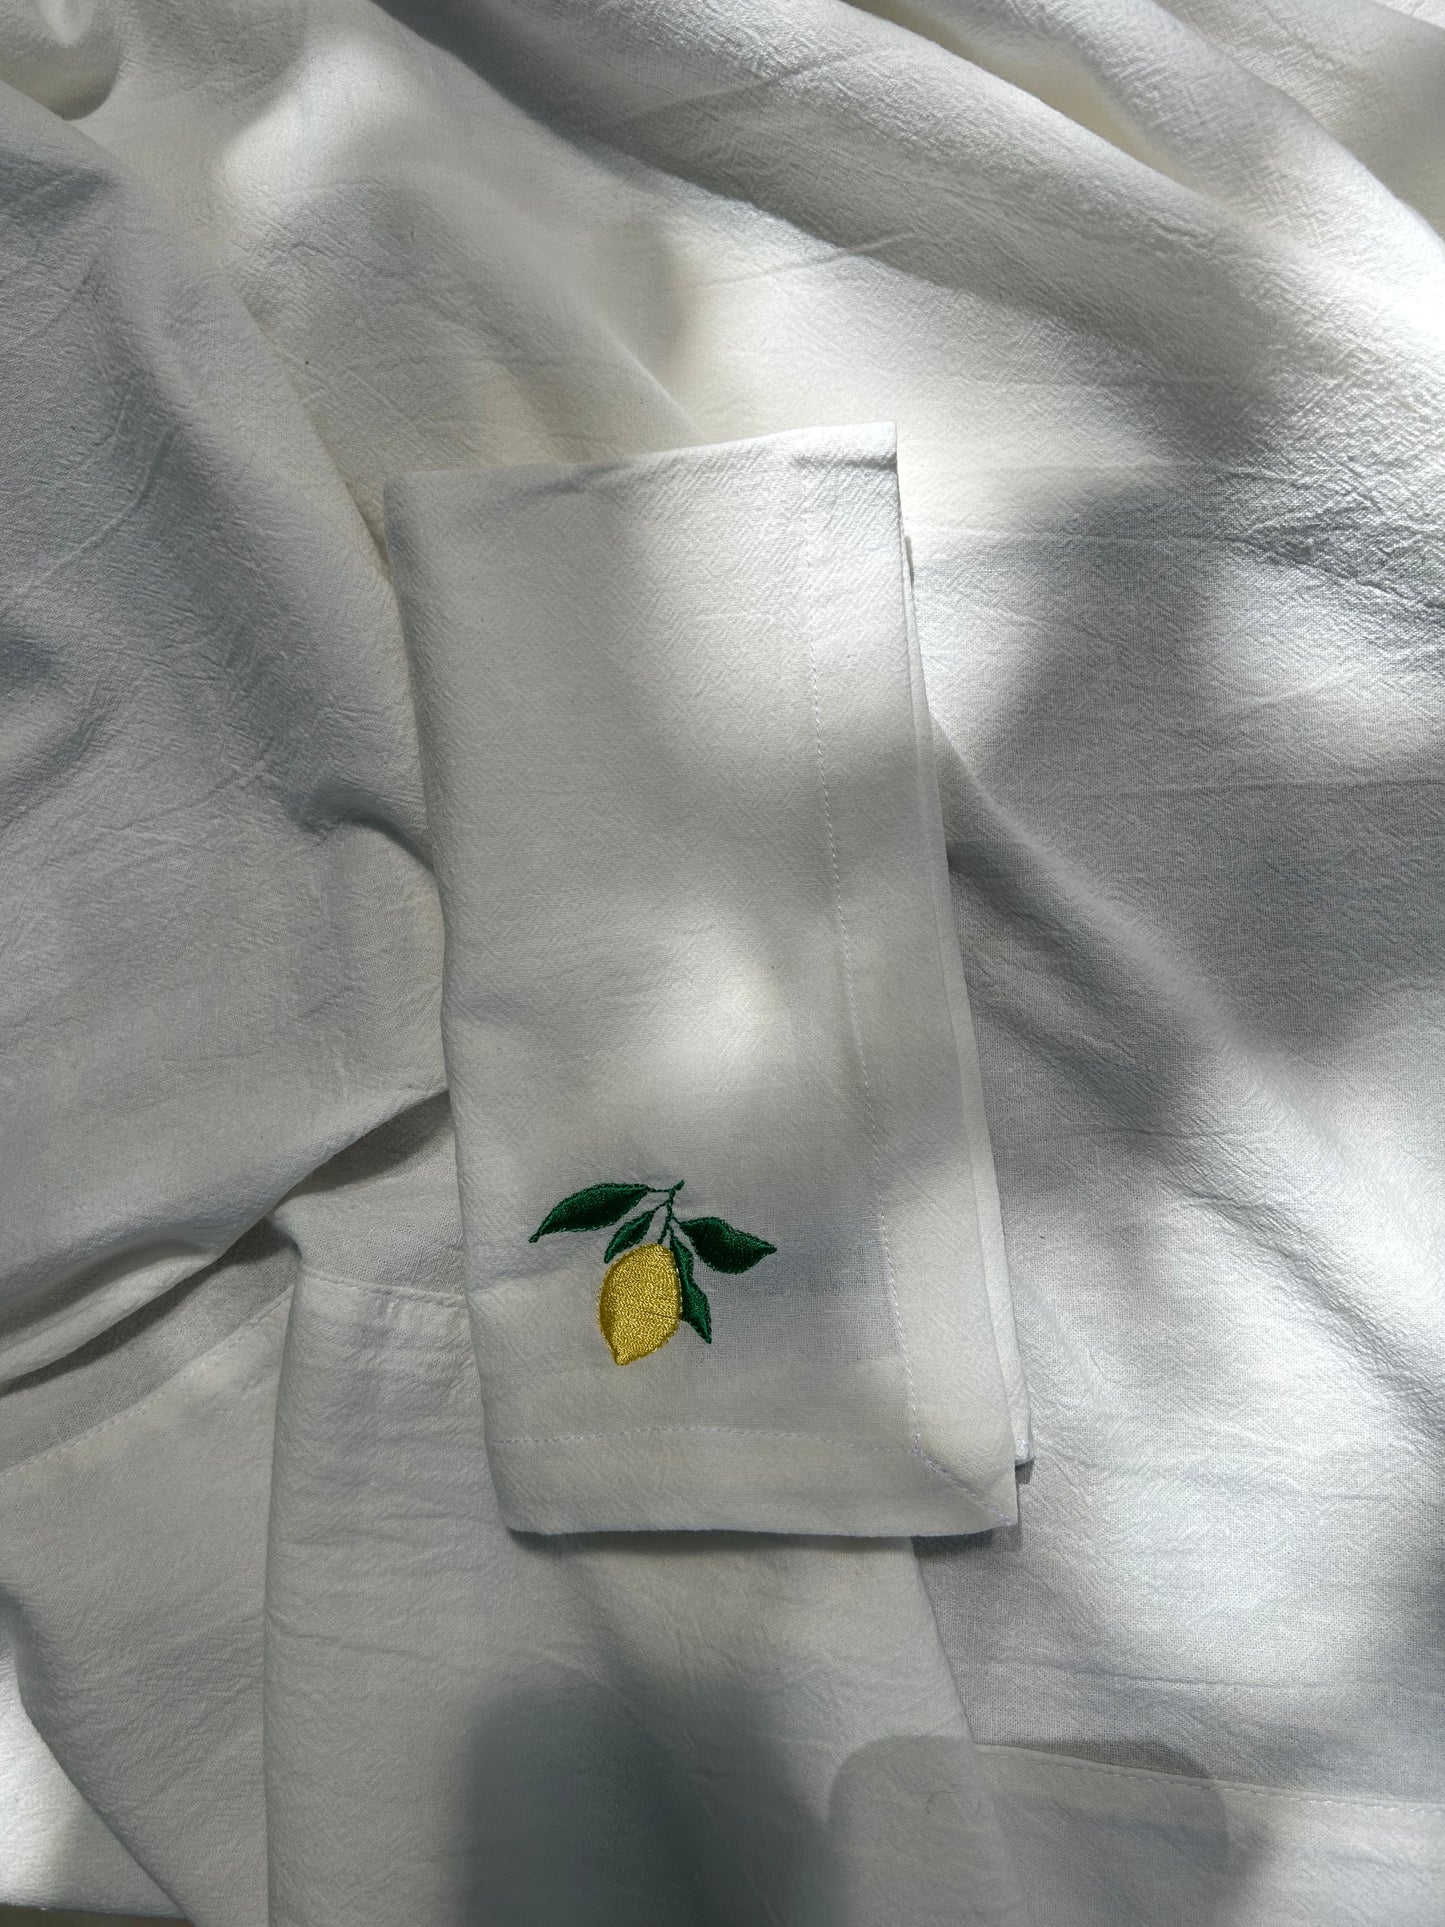 Embroidered lemon napkin set